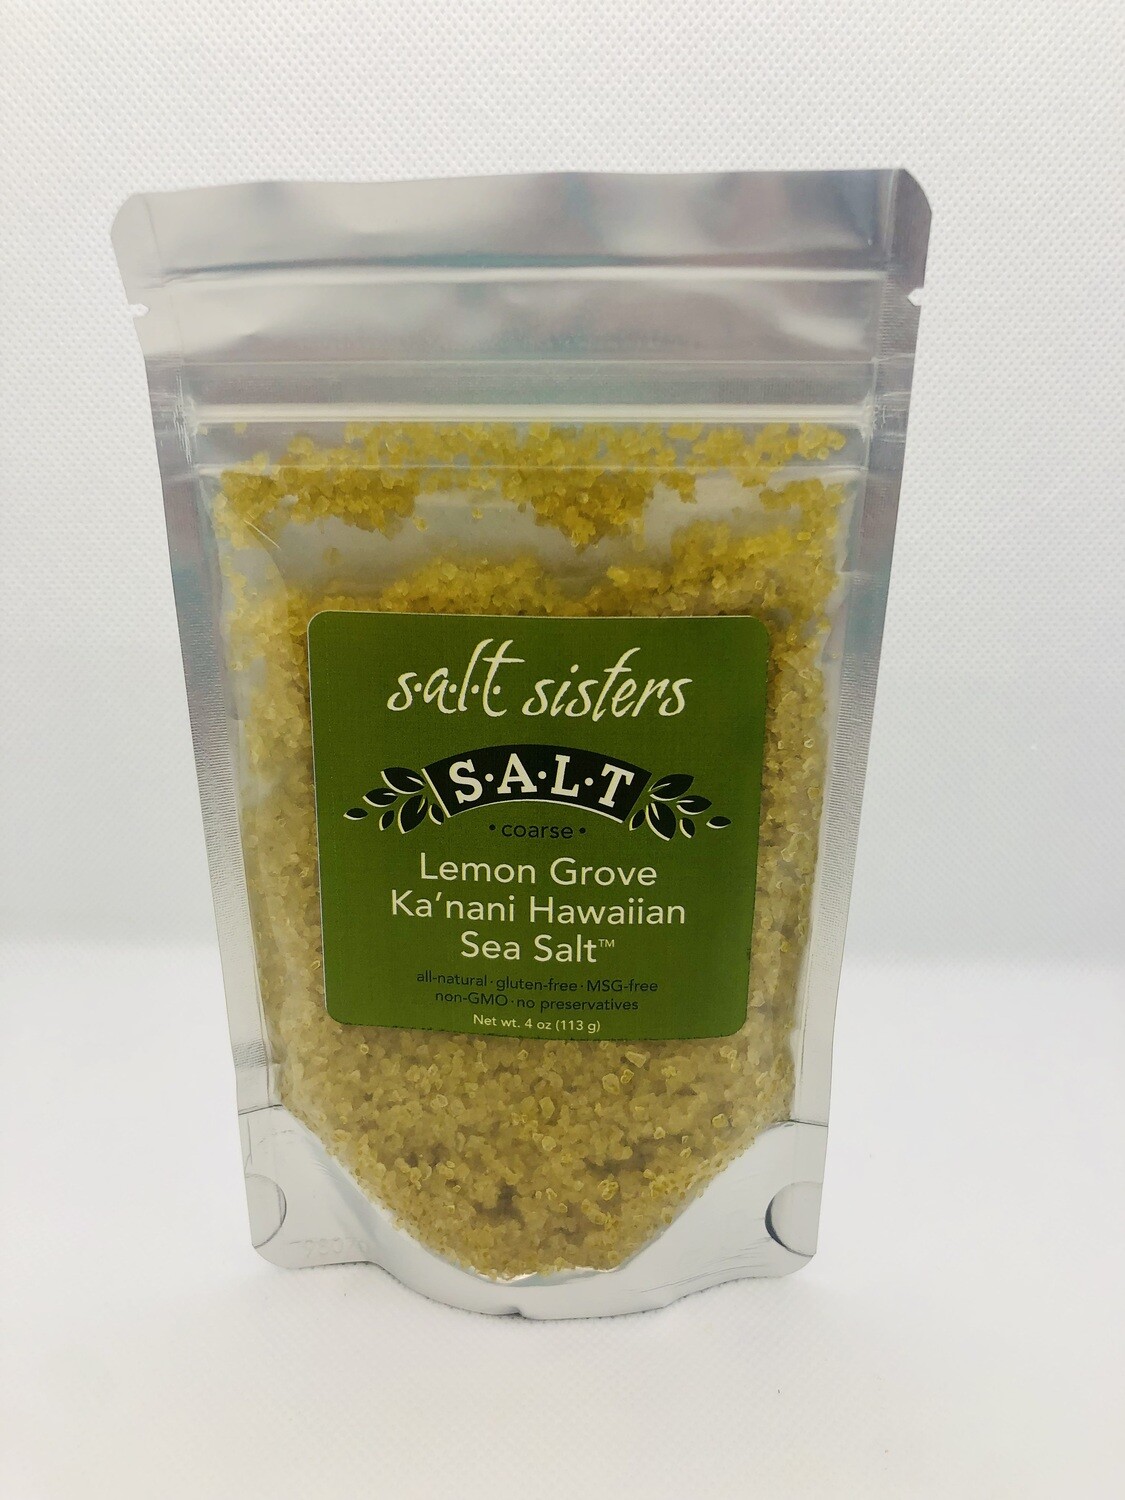 Lemon Grove KA’NANI Hawaiian Sea Salt, coarse